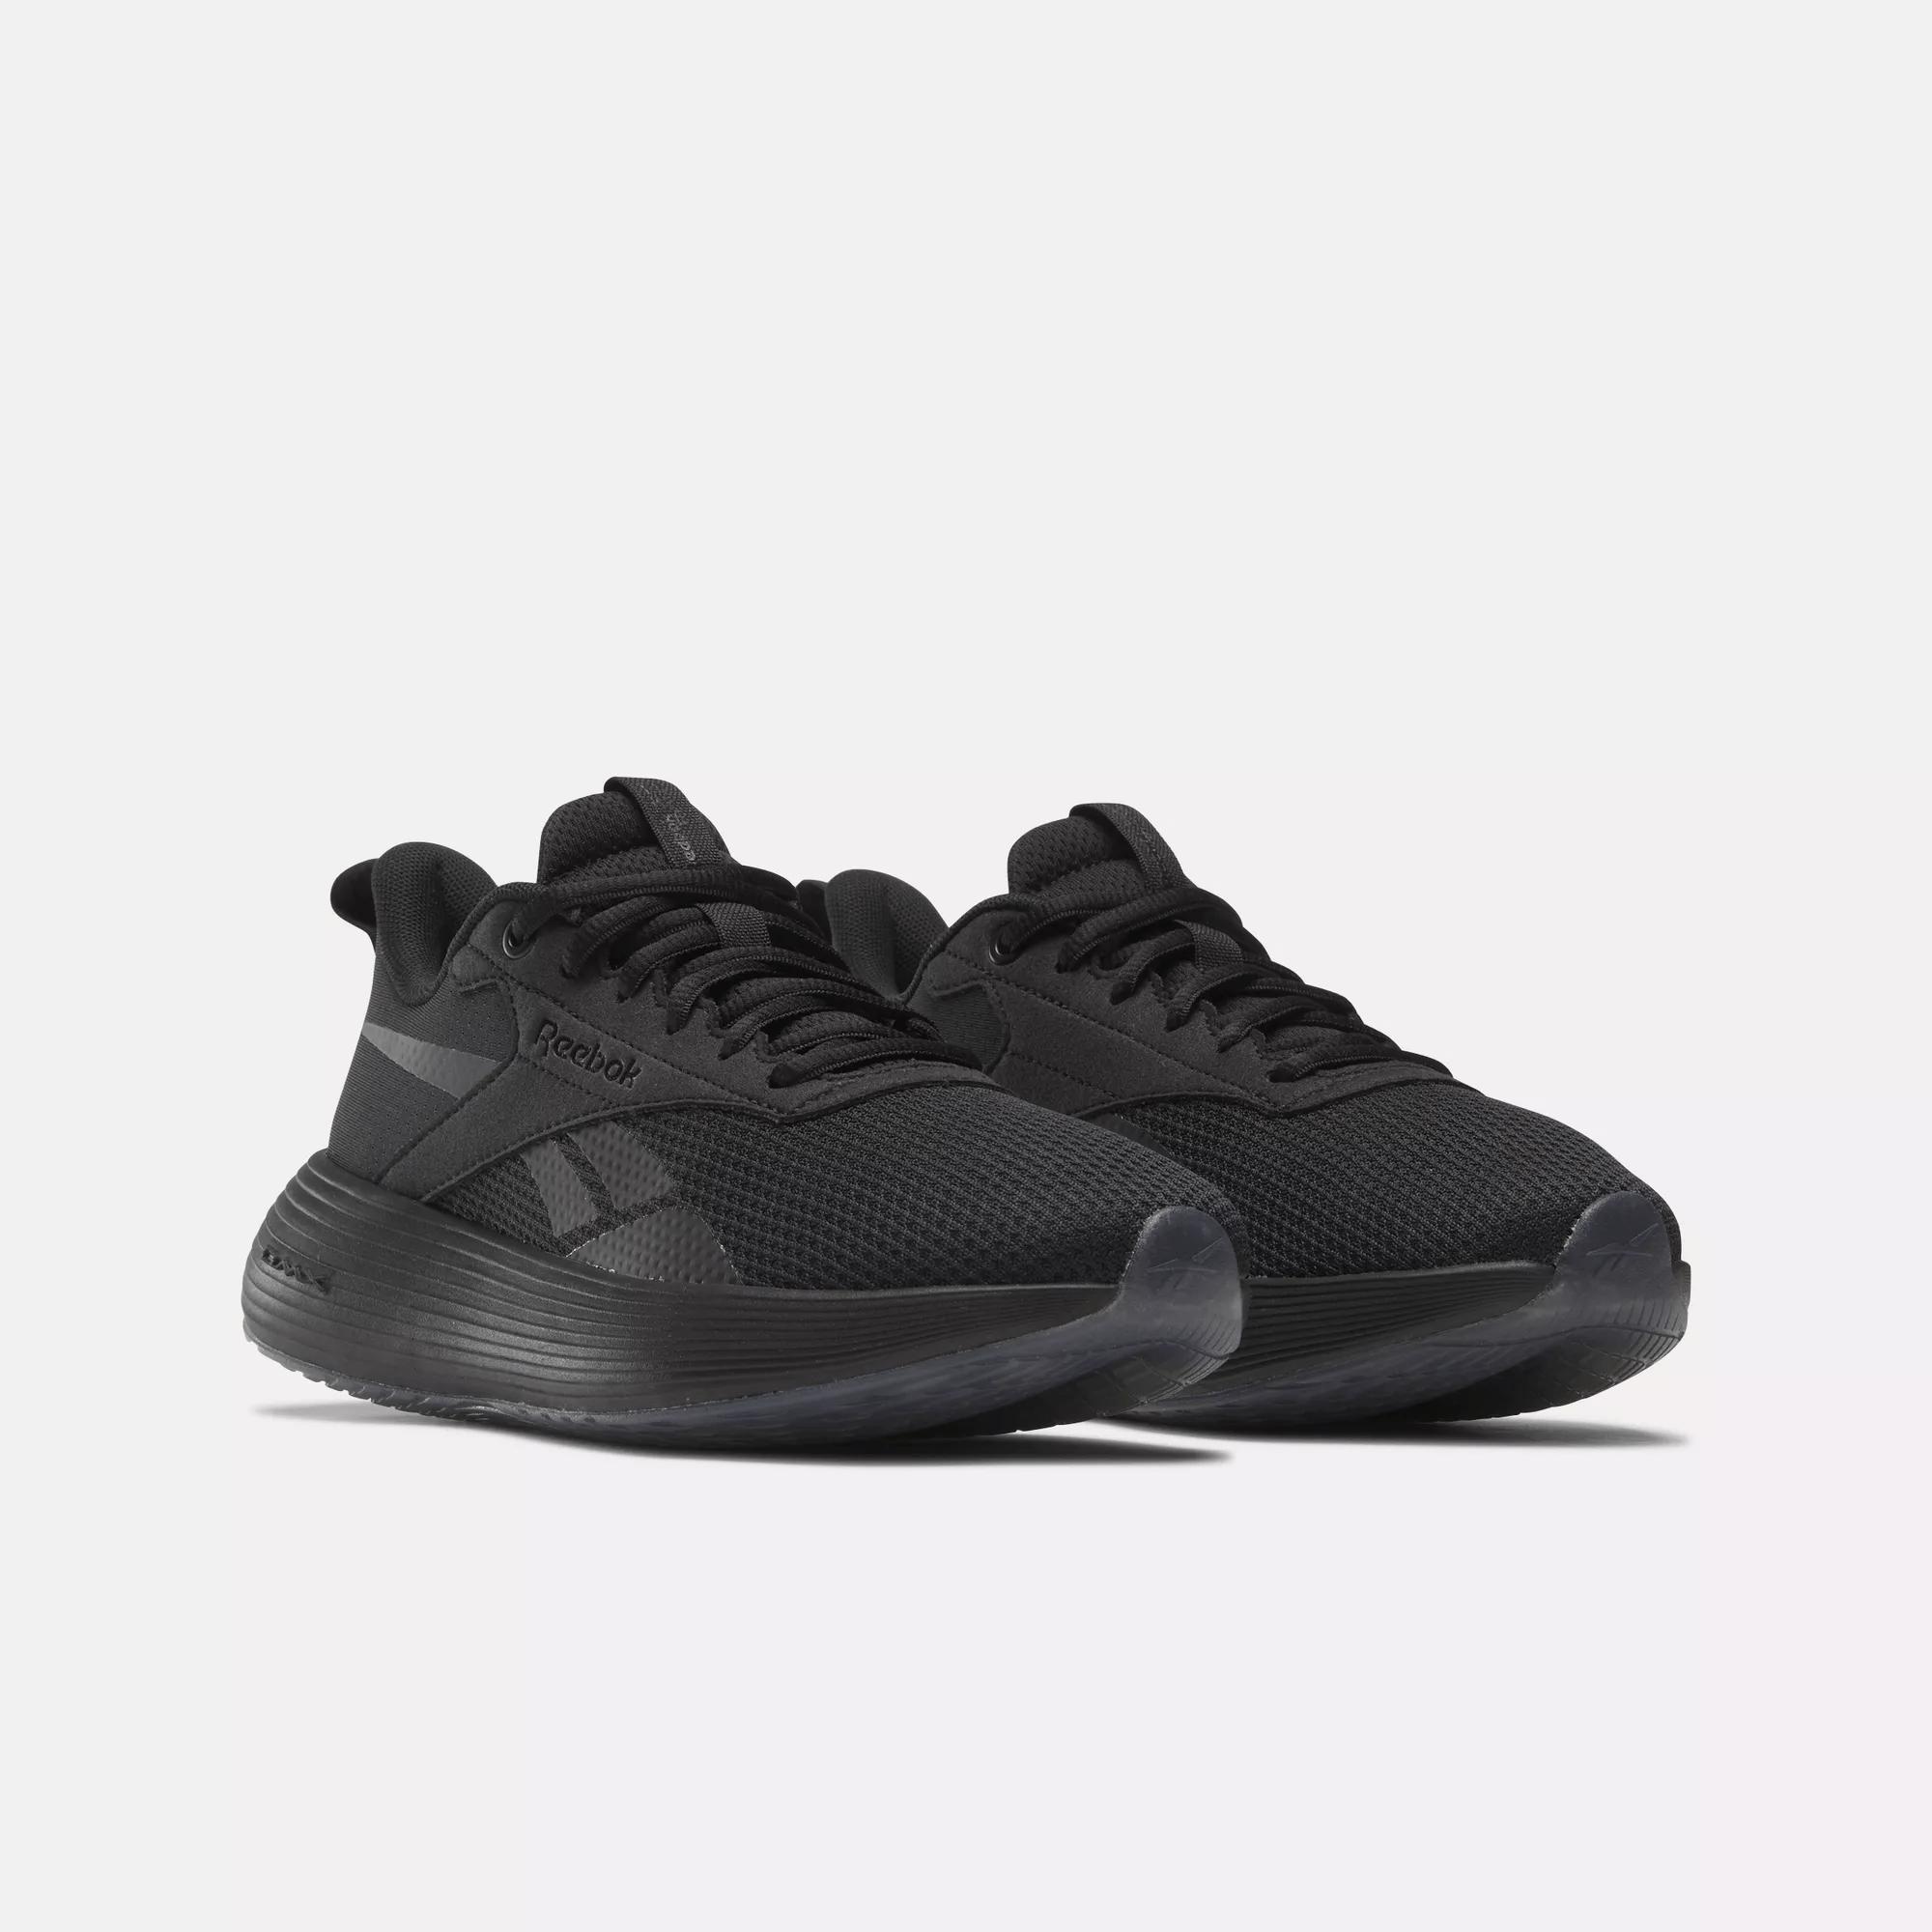 Reebok Dmx Comfort + Walking Shoes in Black | Lyst